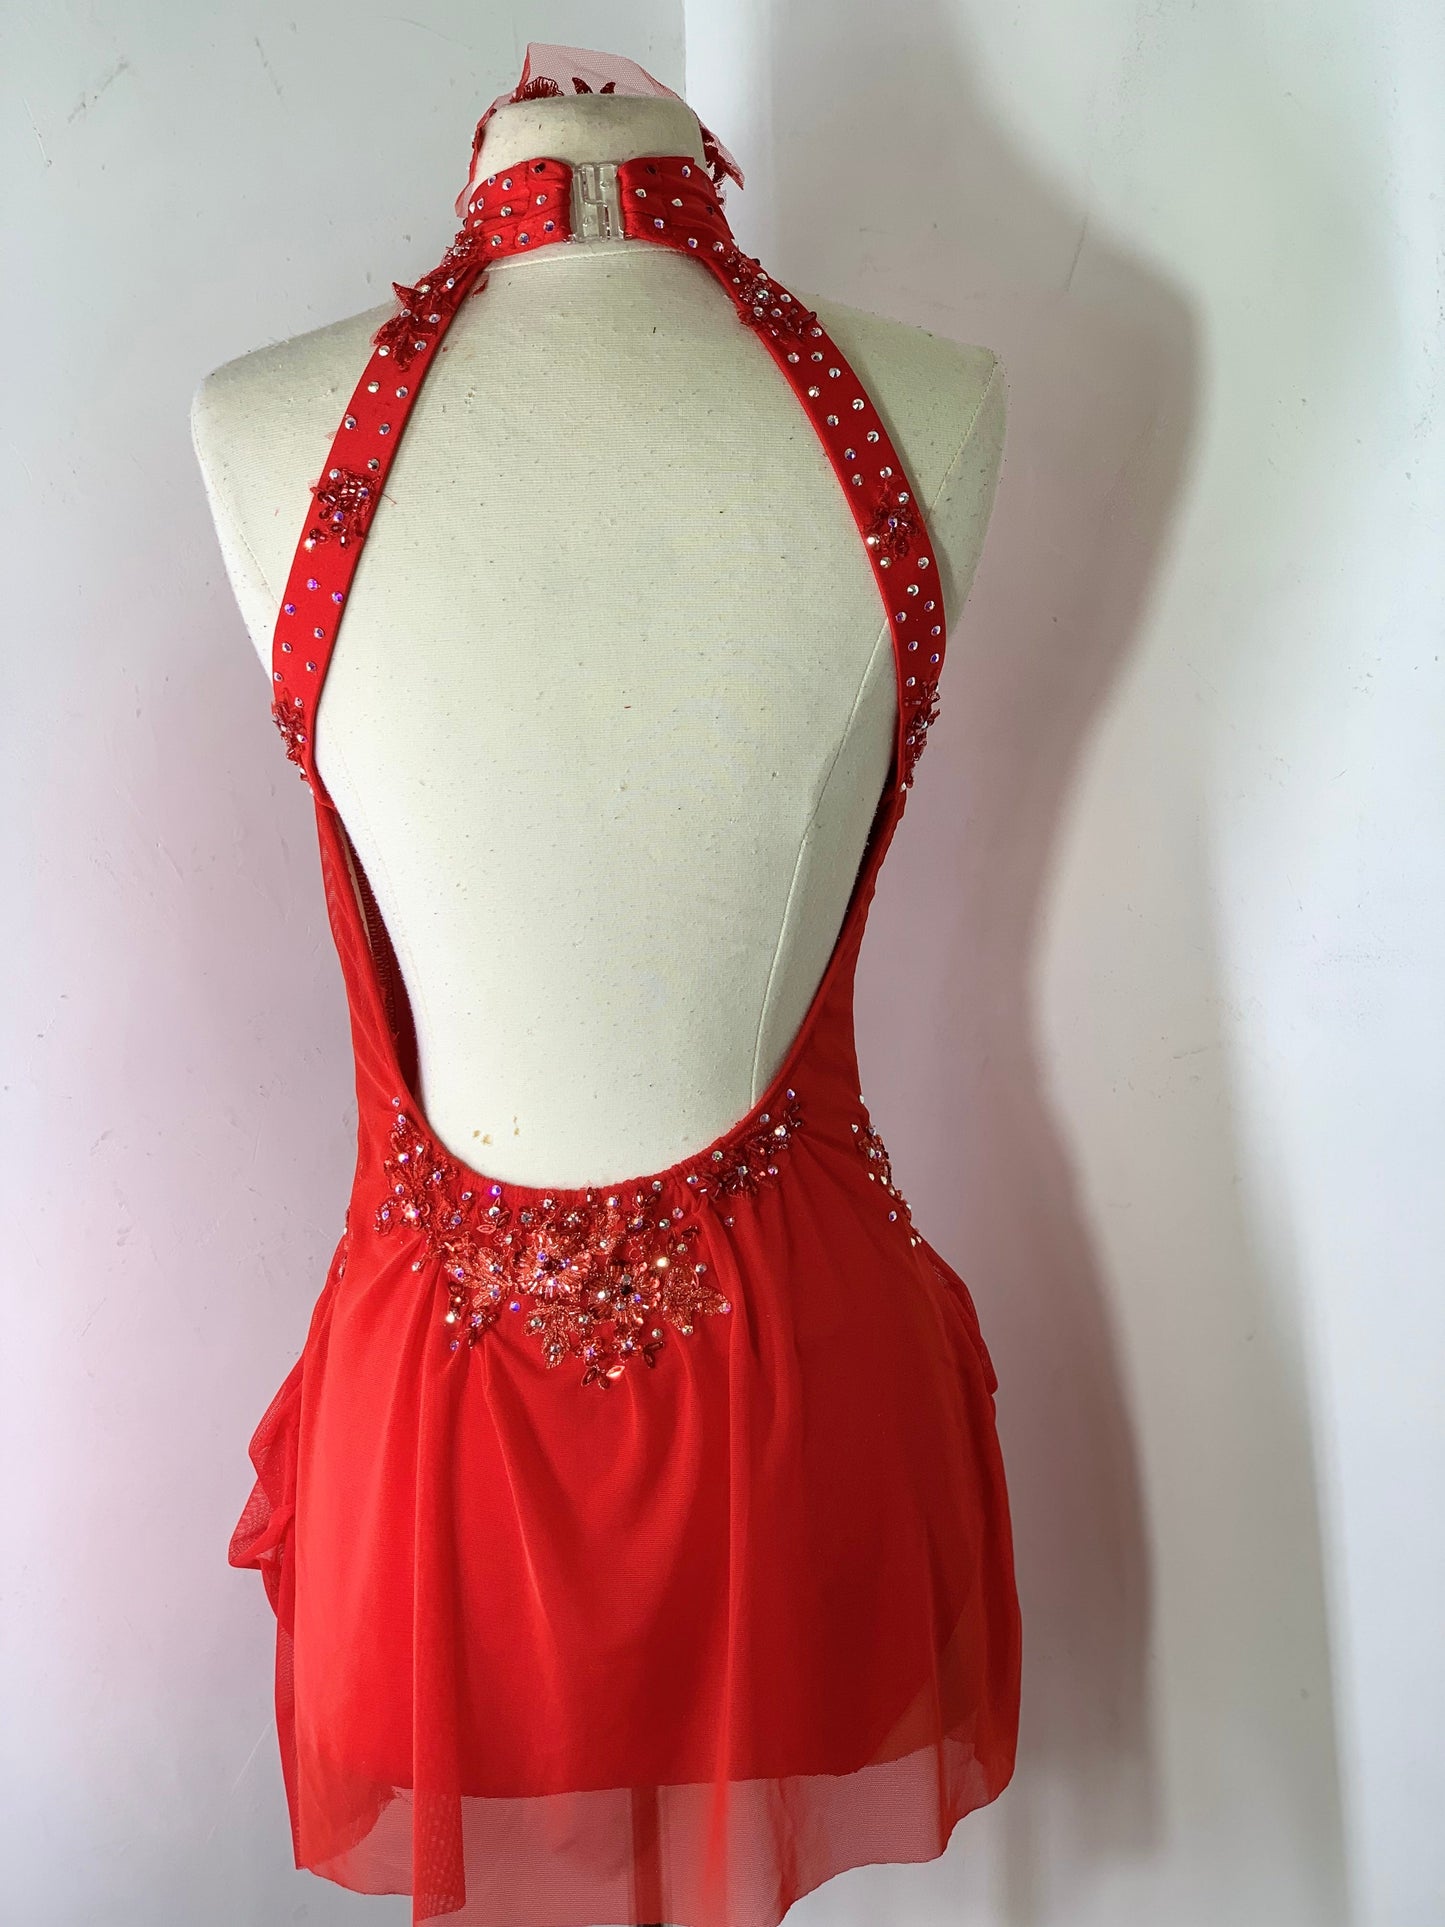 Mallard Draped red dance dress